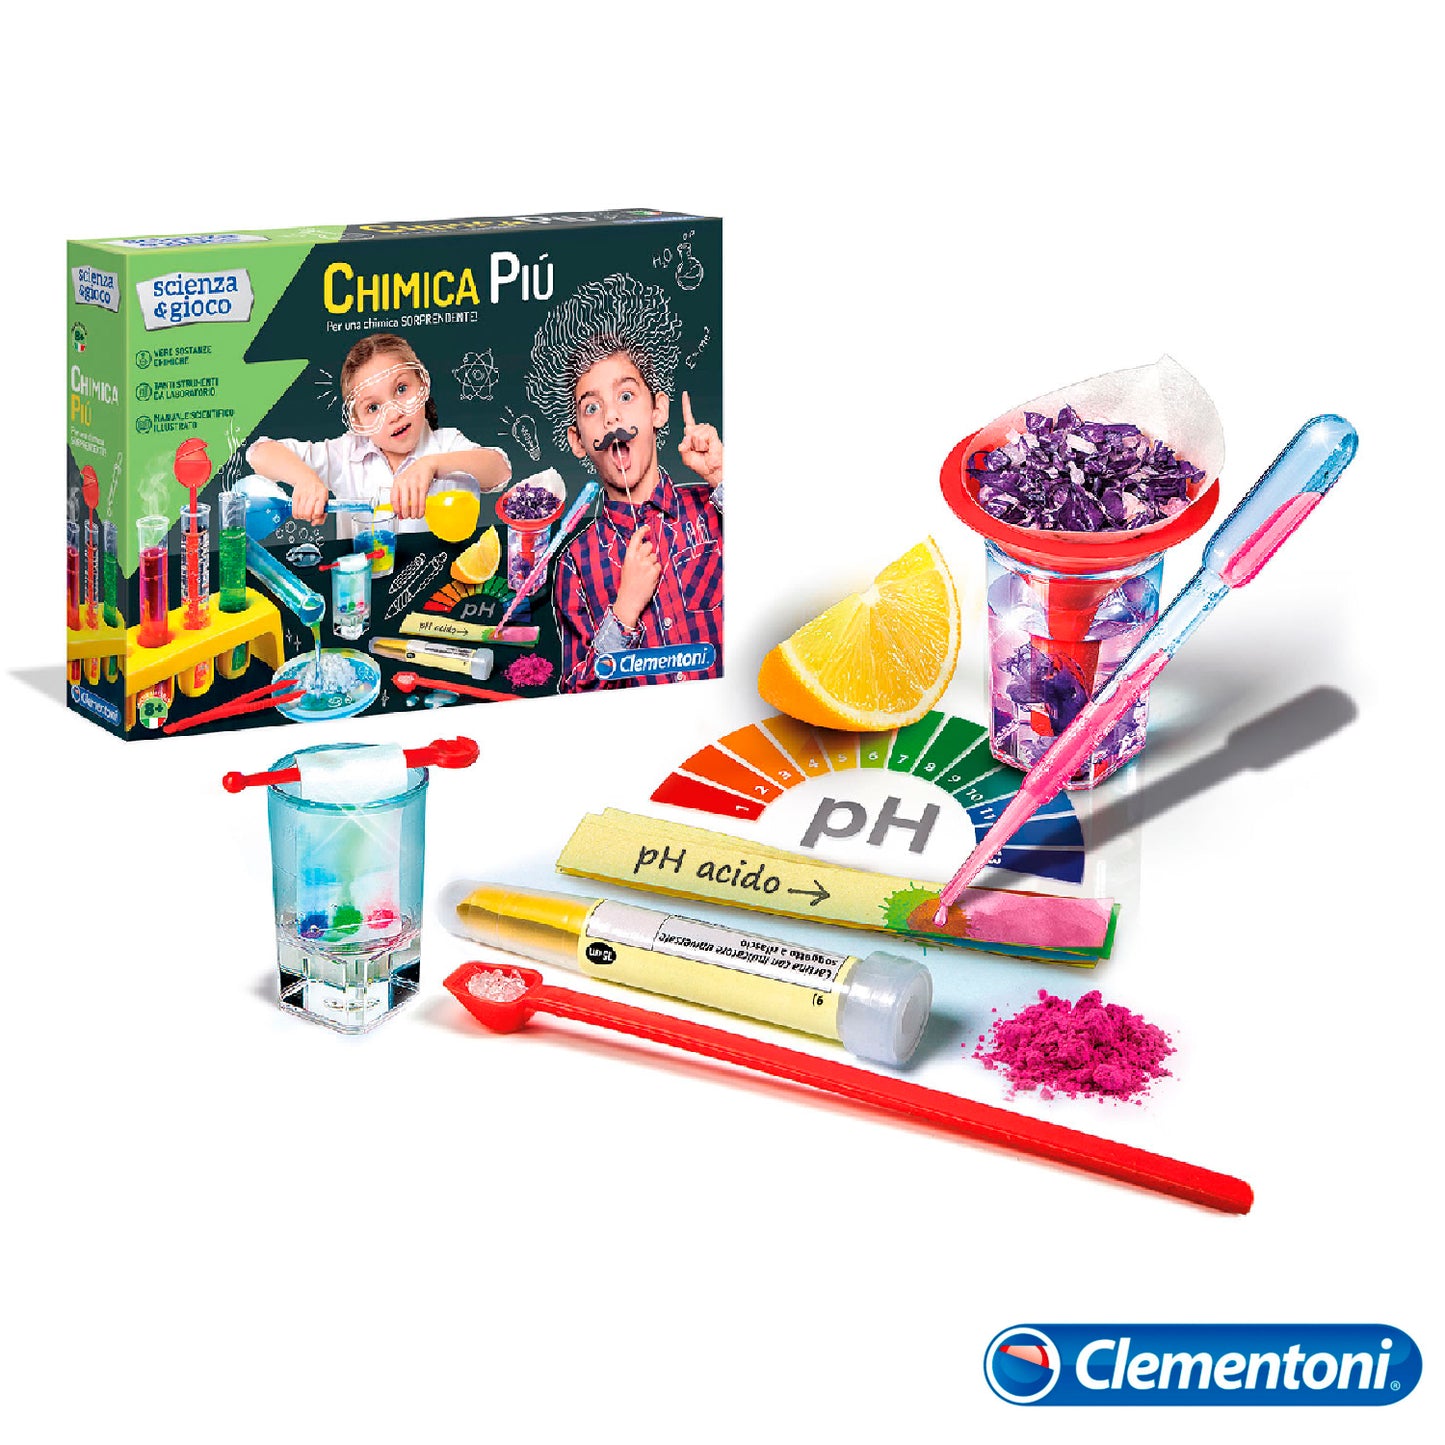 Clementoni - Chemistry Plus